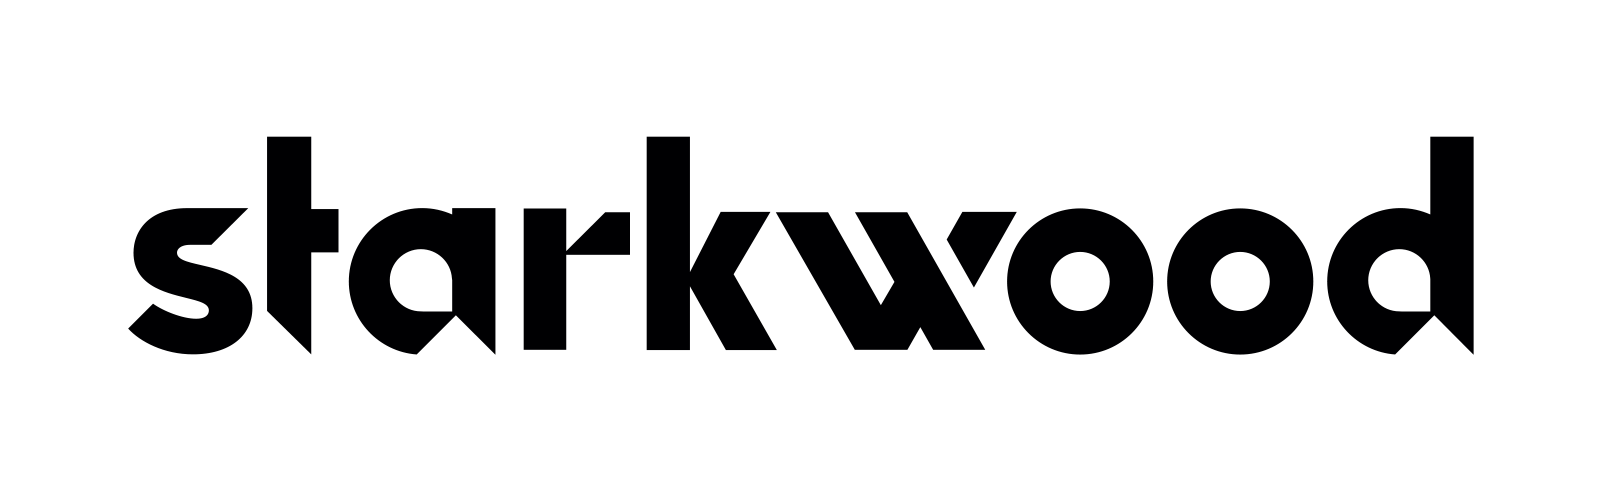 Starkwood — партнер производителя окон WOODER